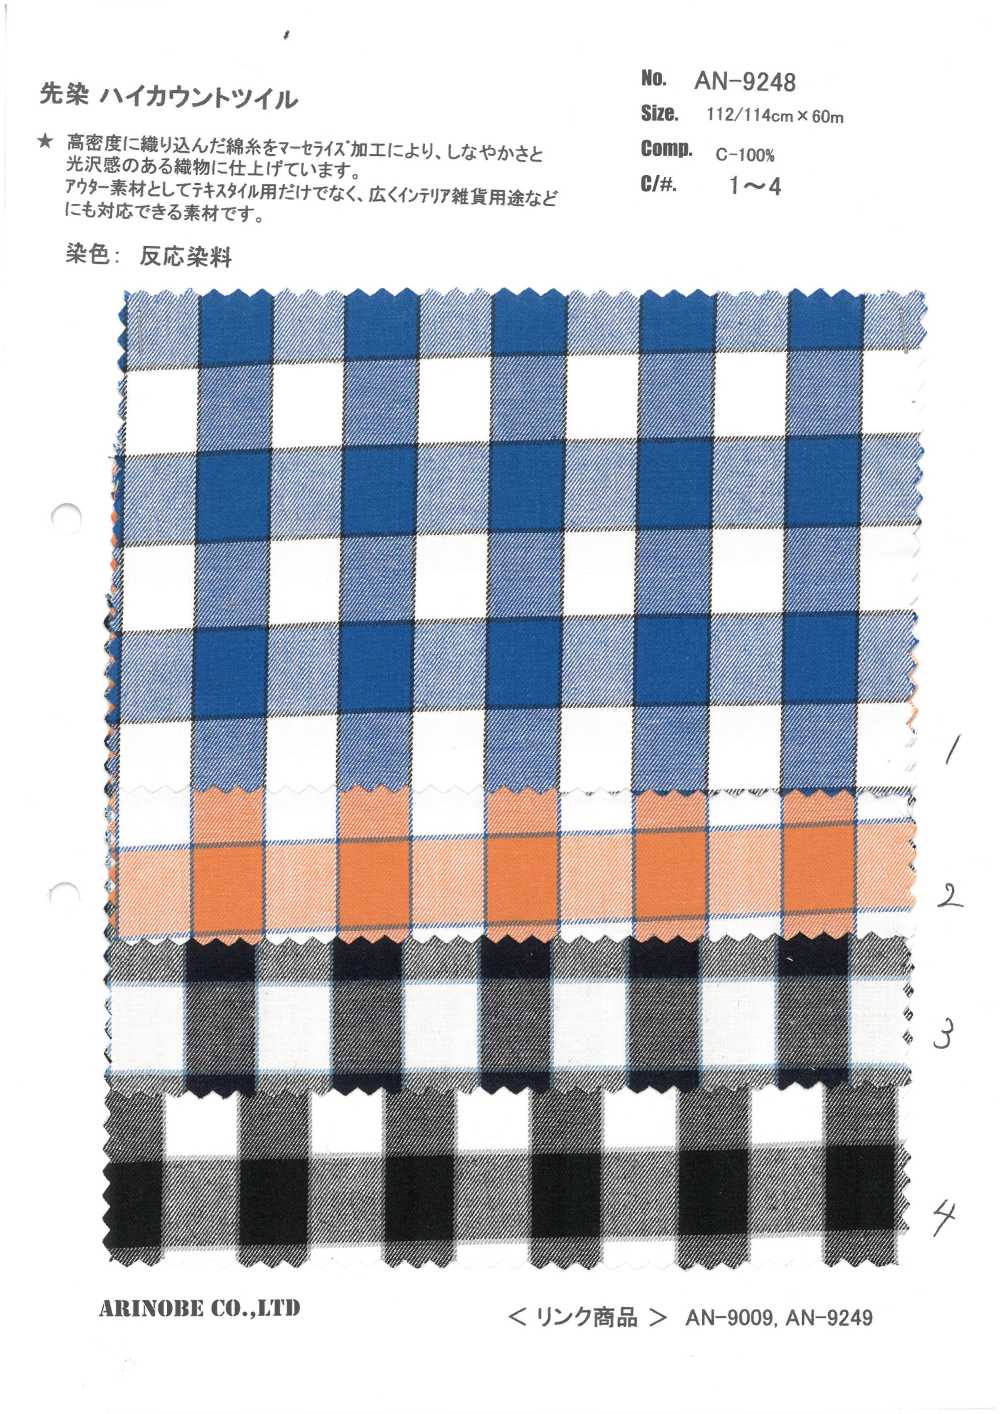 AN-9248 Yarn- Yarn Dyed High-count Twill[Textile / Fabric] ARINOBE